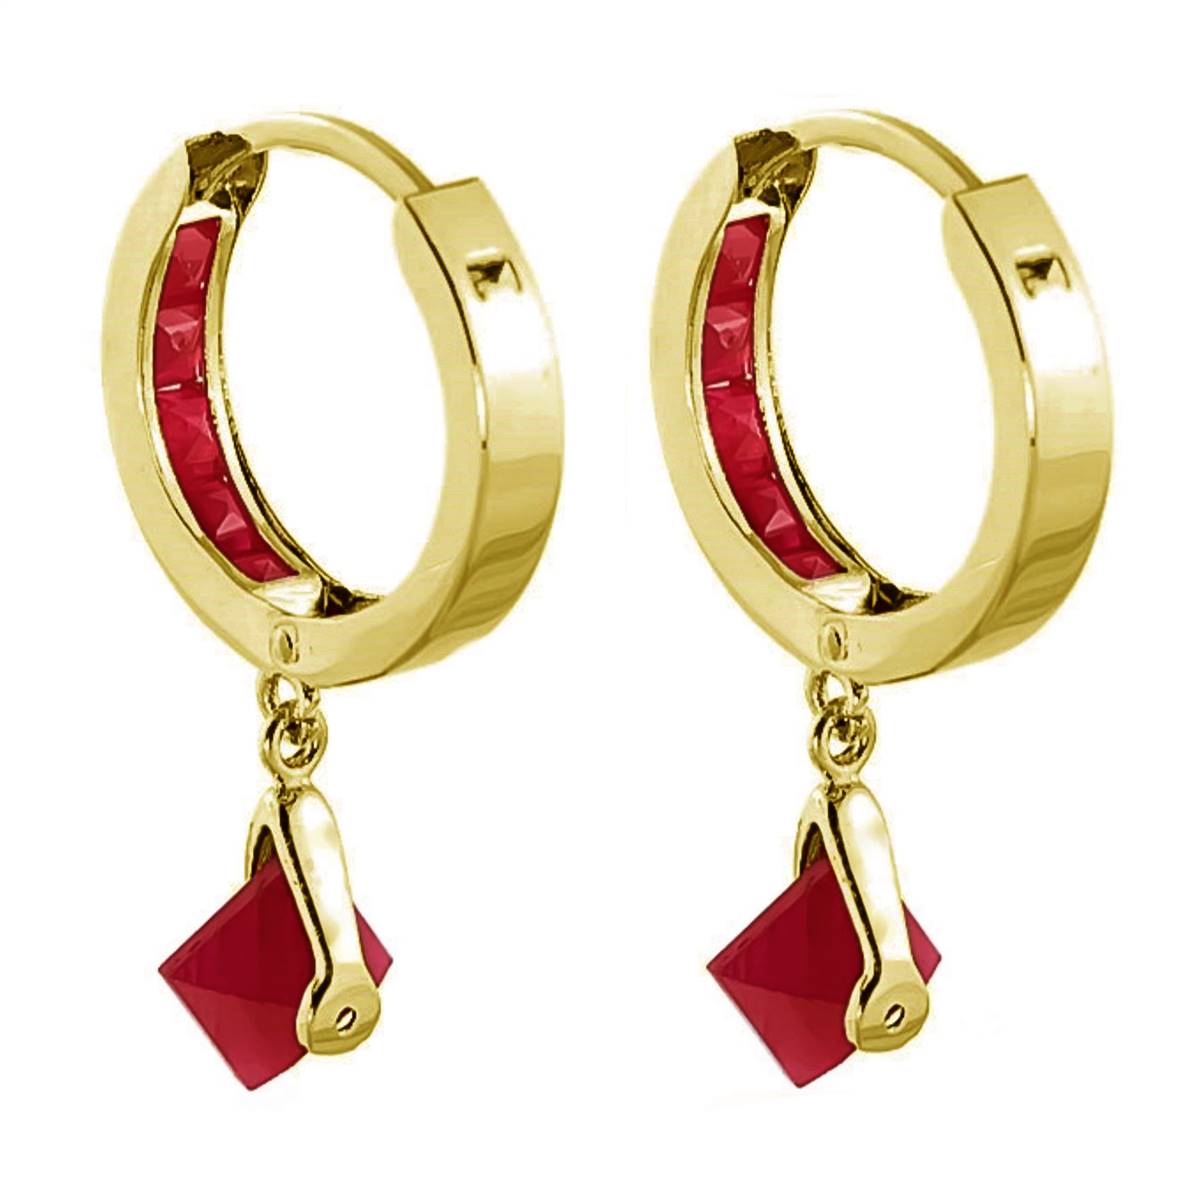 3.7 Carat 14K Solid Yellow Gold Hoop Earrings Dangling Ruby